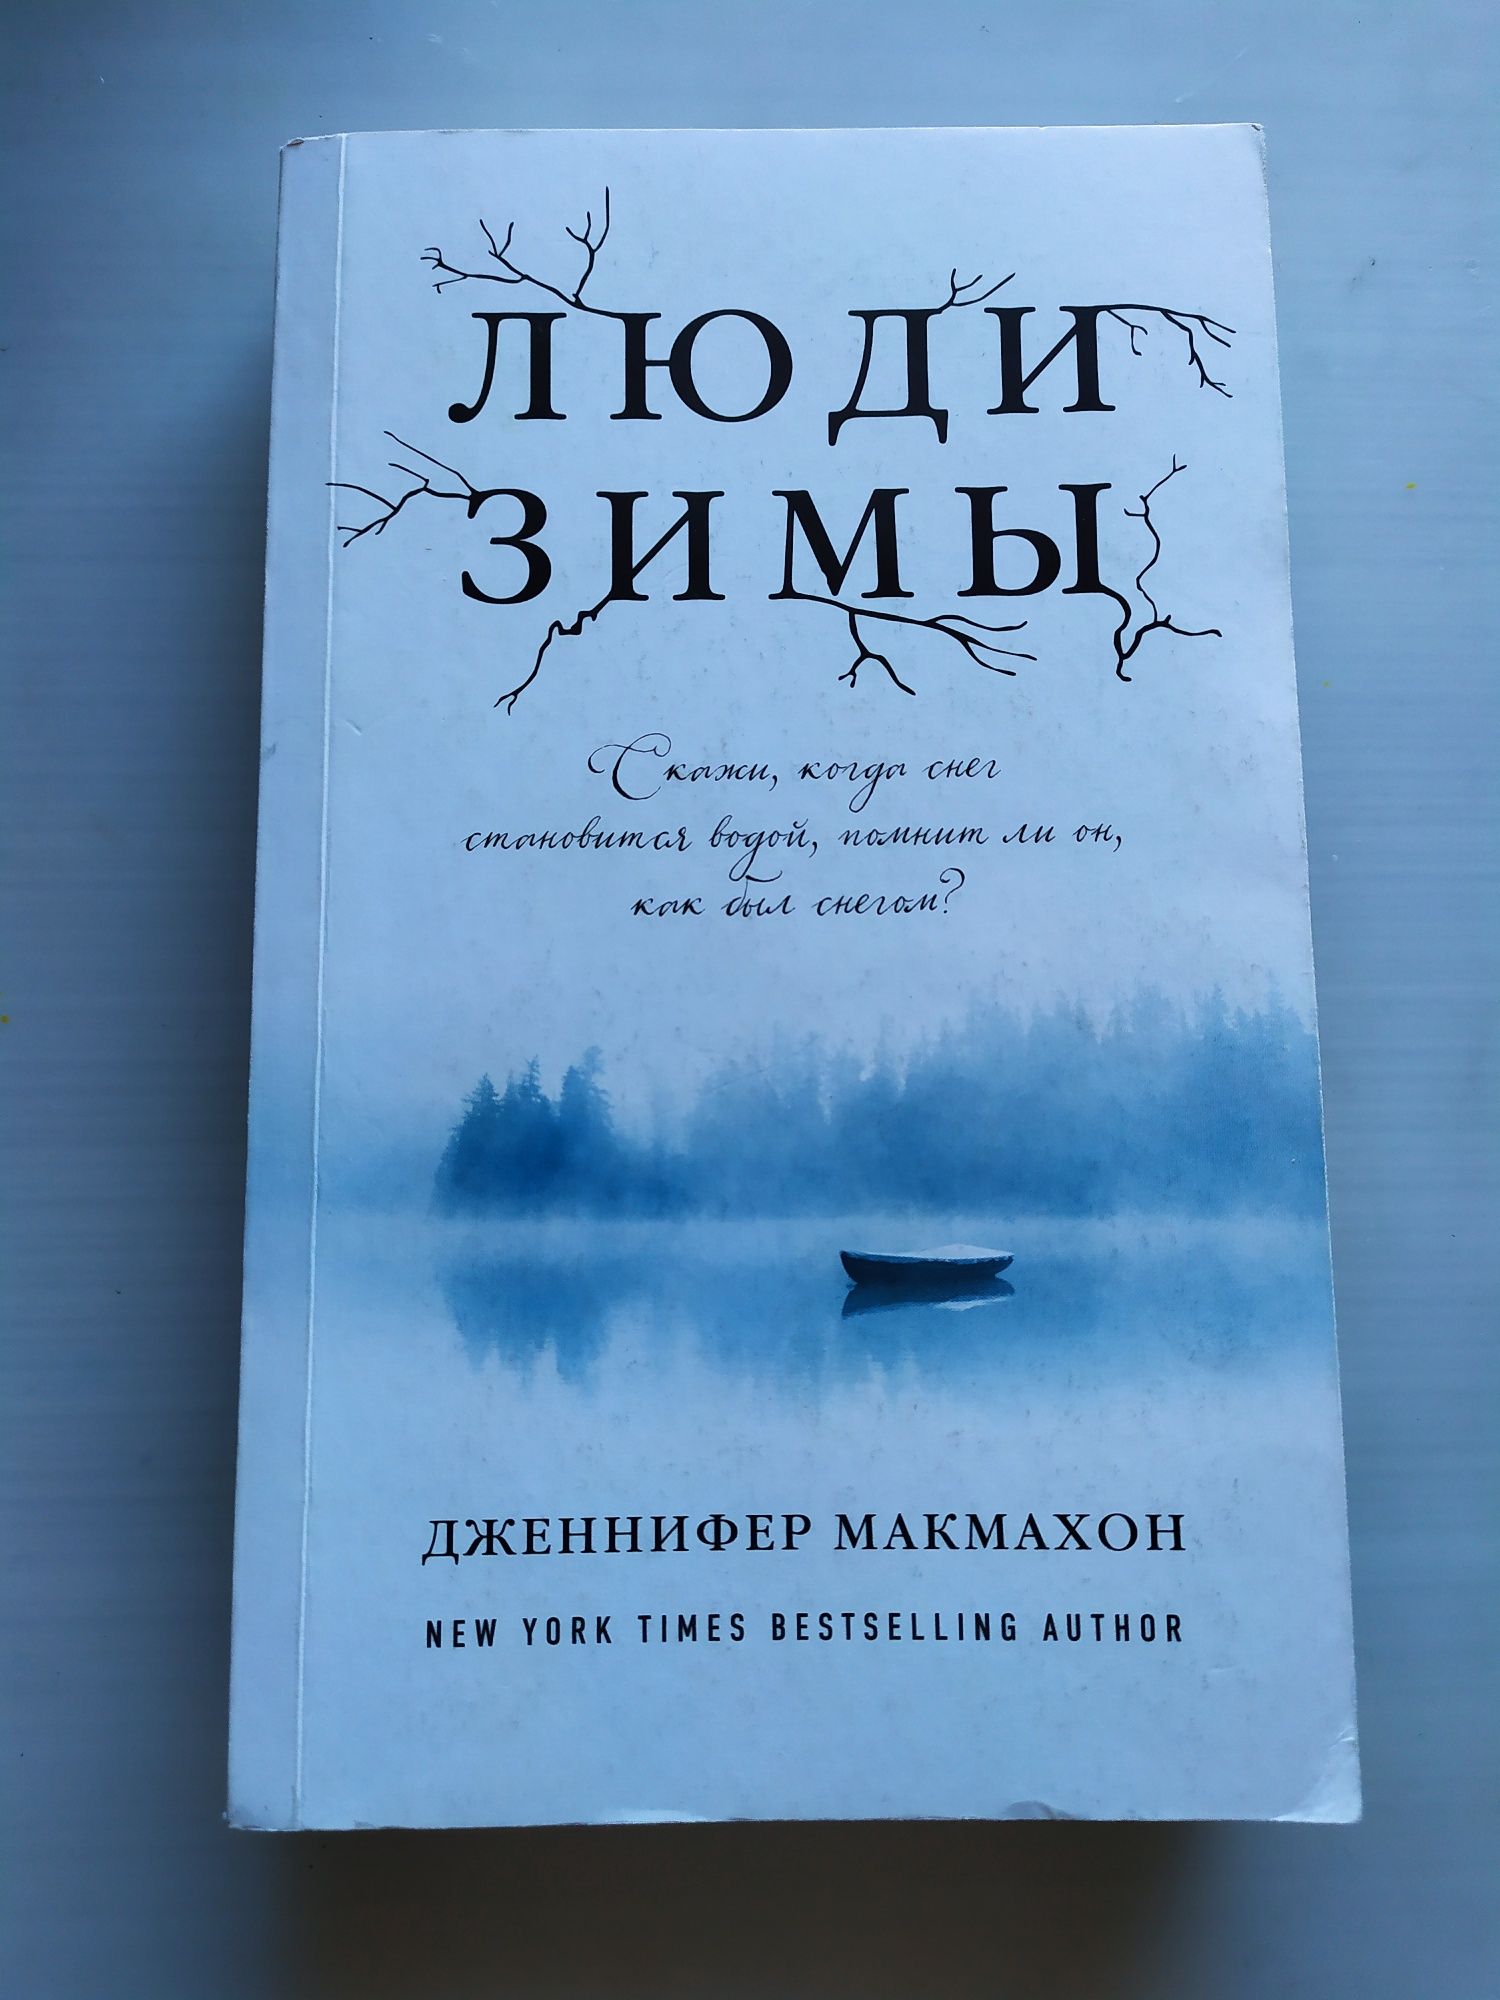 Книга "Люди зимы". Дженнифер Макмахон